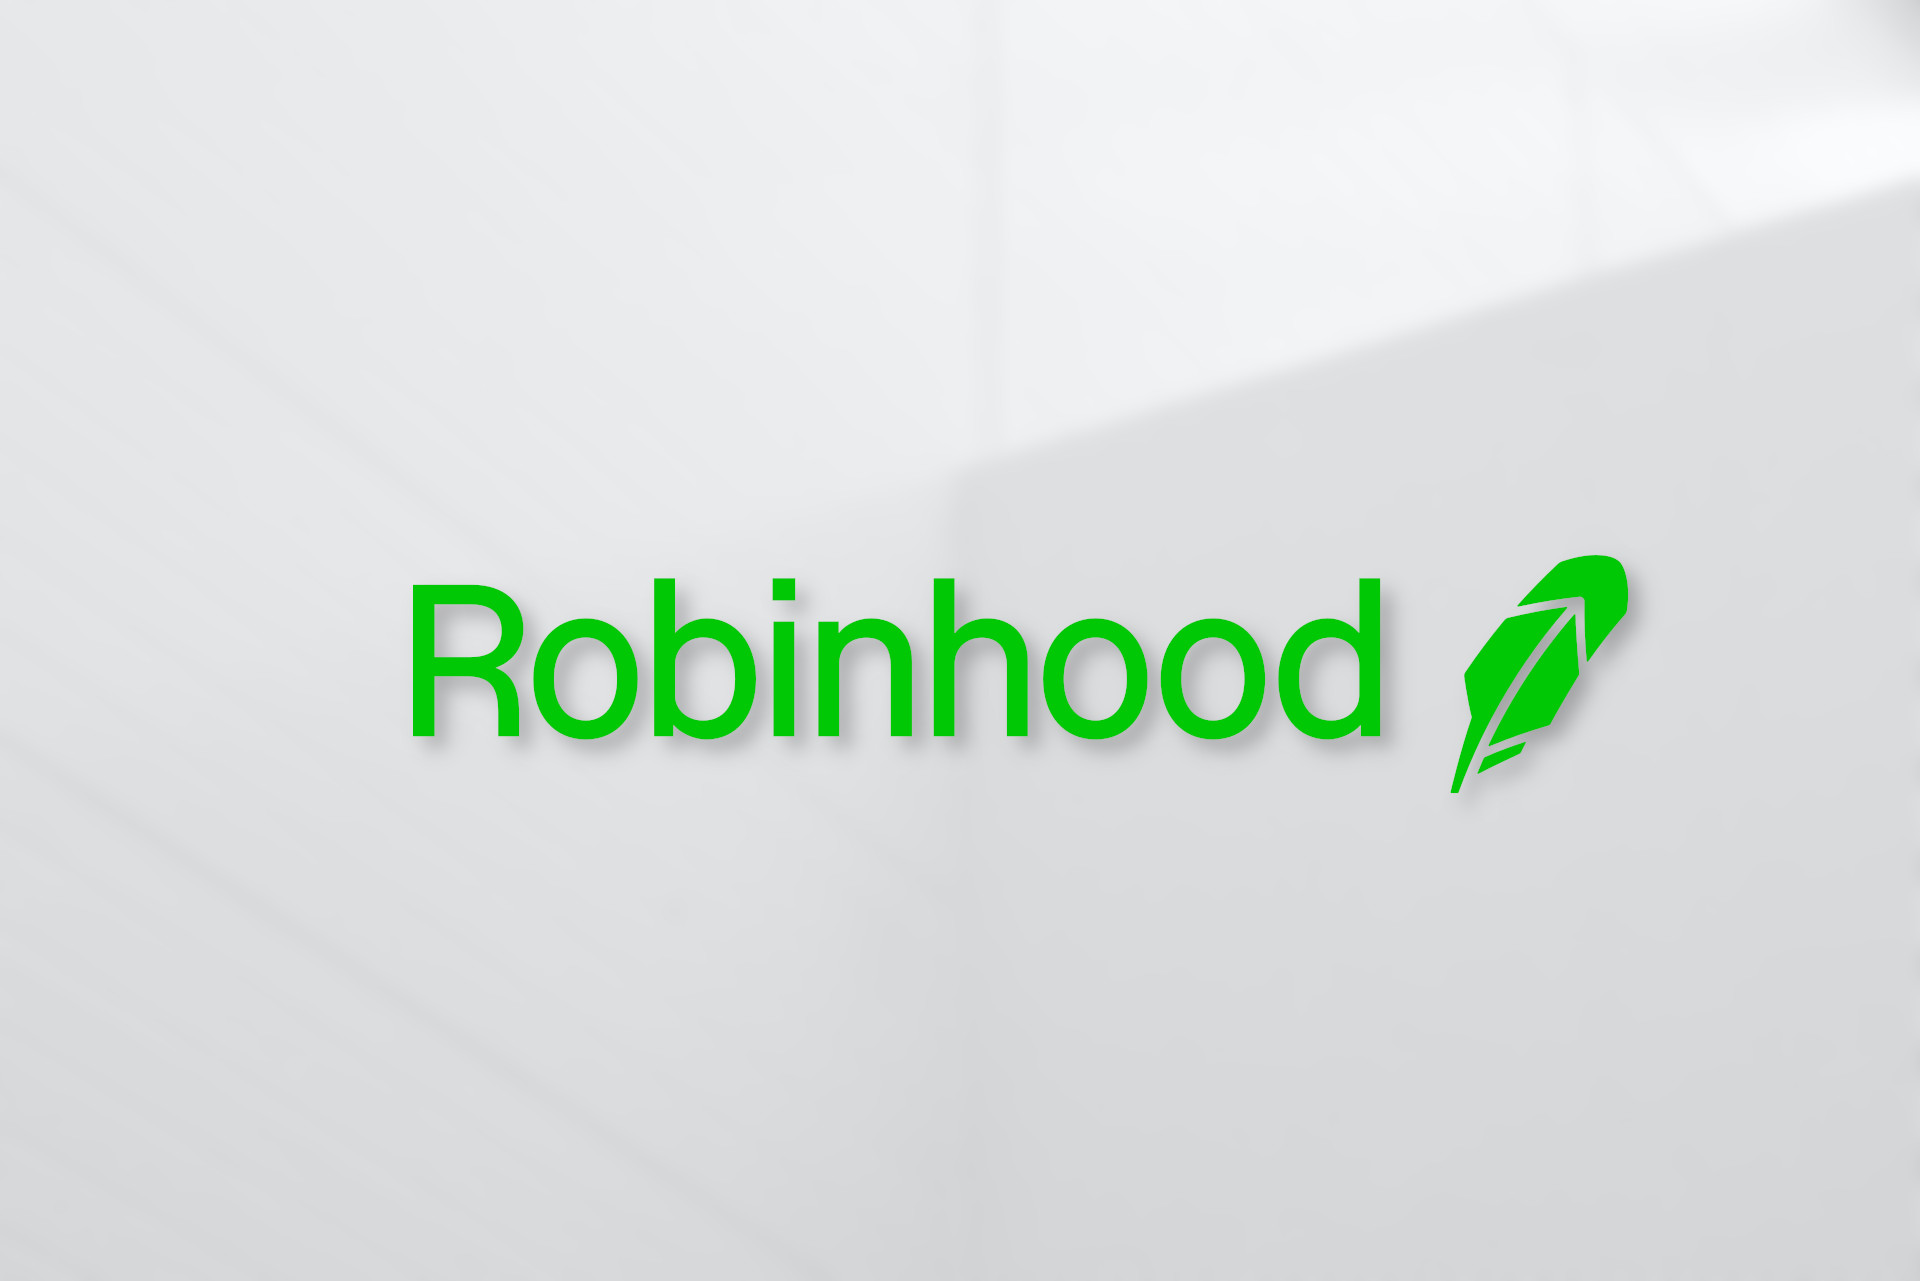 Robinhood crypto image cover